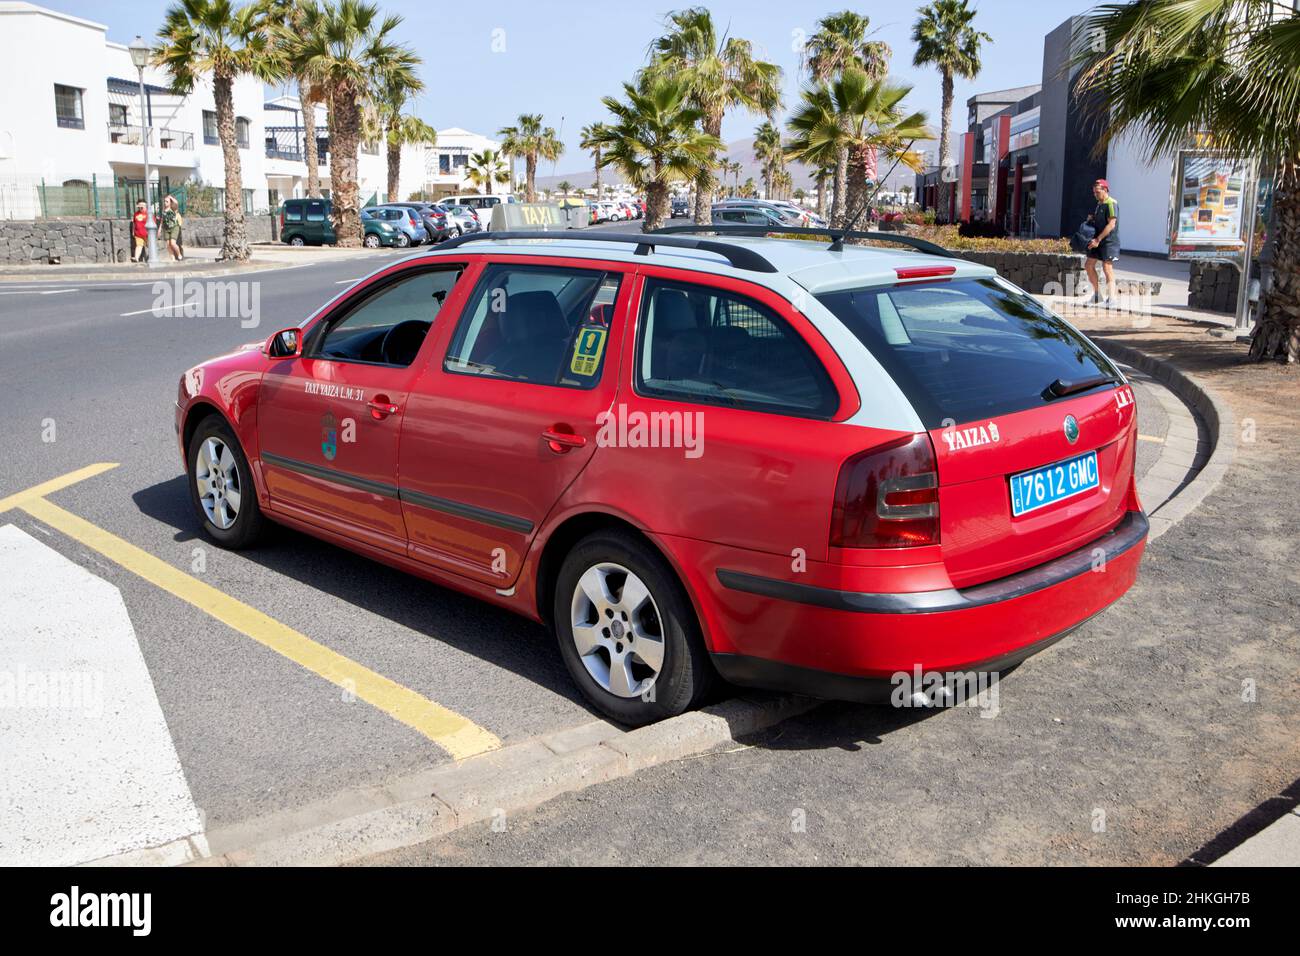 red and silver skoda estate car yaiza taxi cab at marina rubicon playa blanca Lanzarote Canary Islands Spain Stock Photo